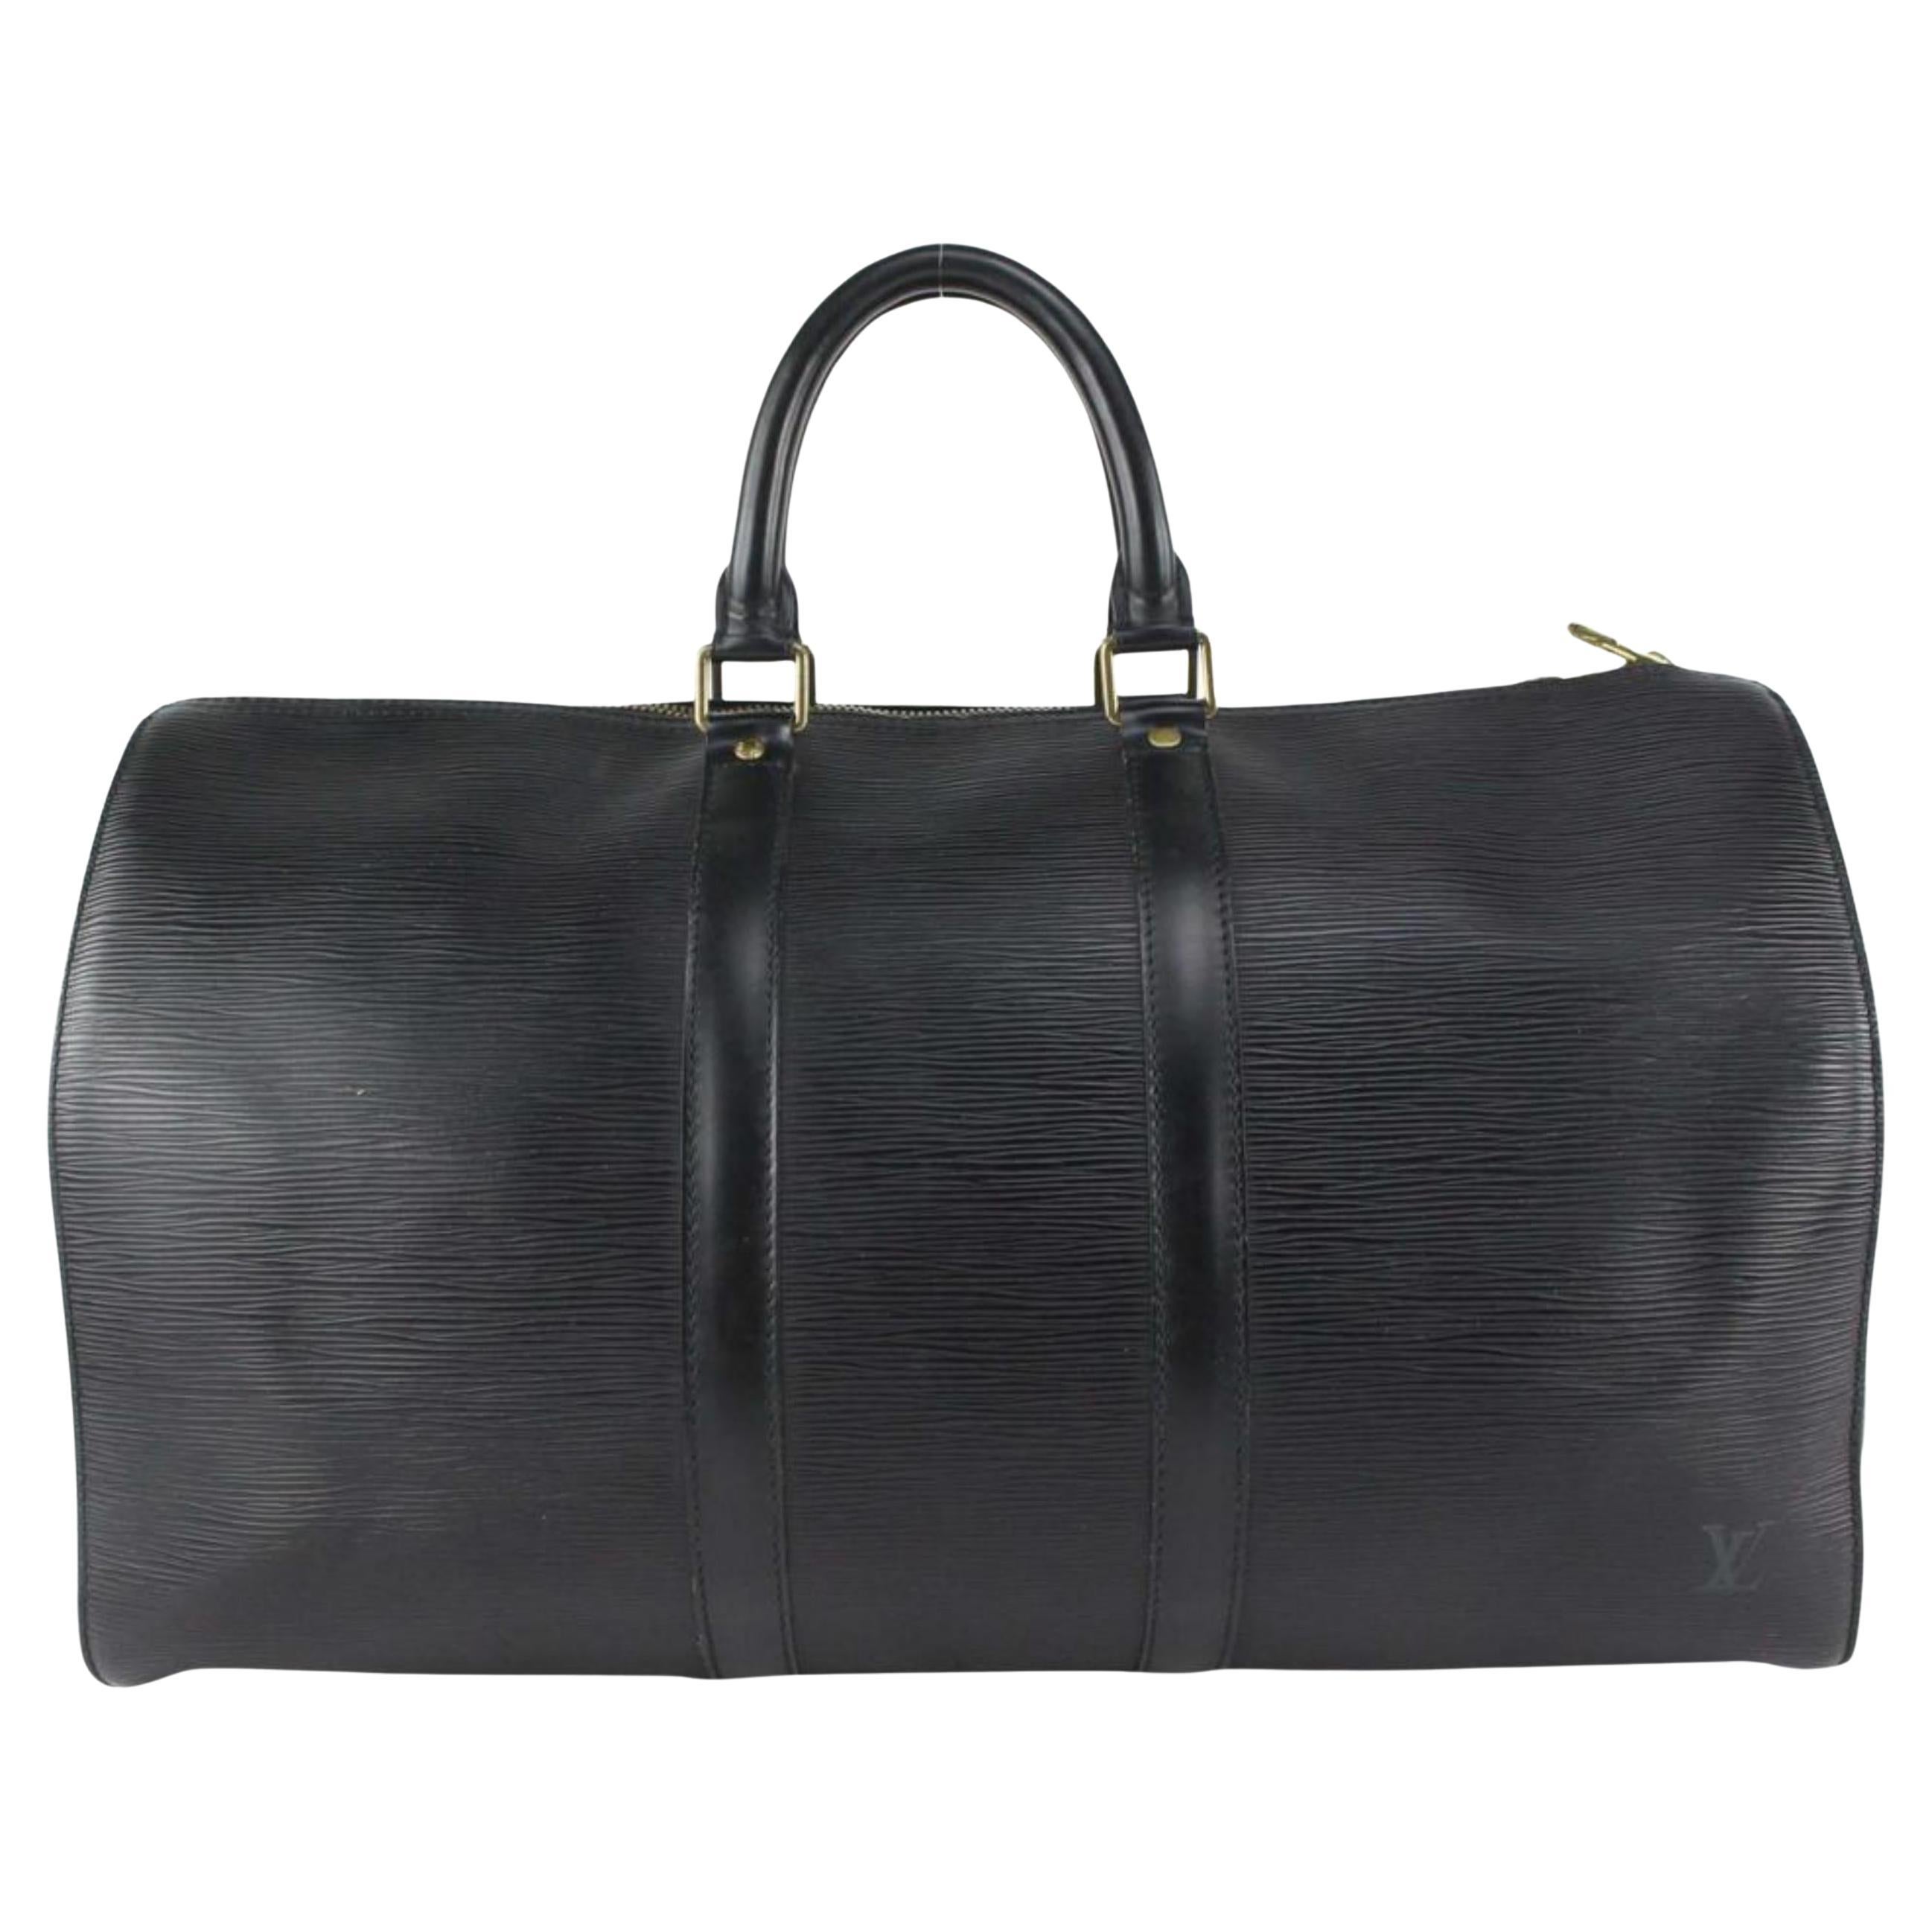 Louis Vuitton Black Epi Leather Noir Keepall 45 Duffle Bag 1118lv31